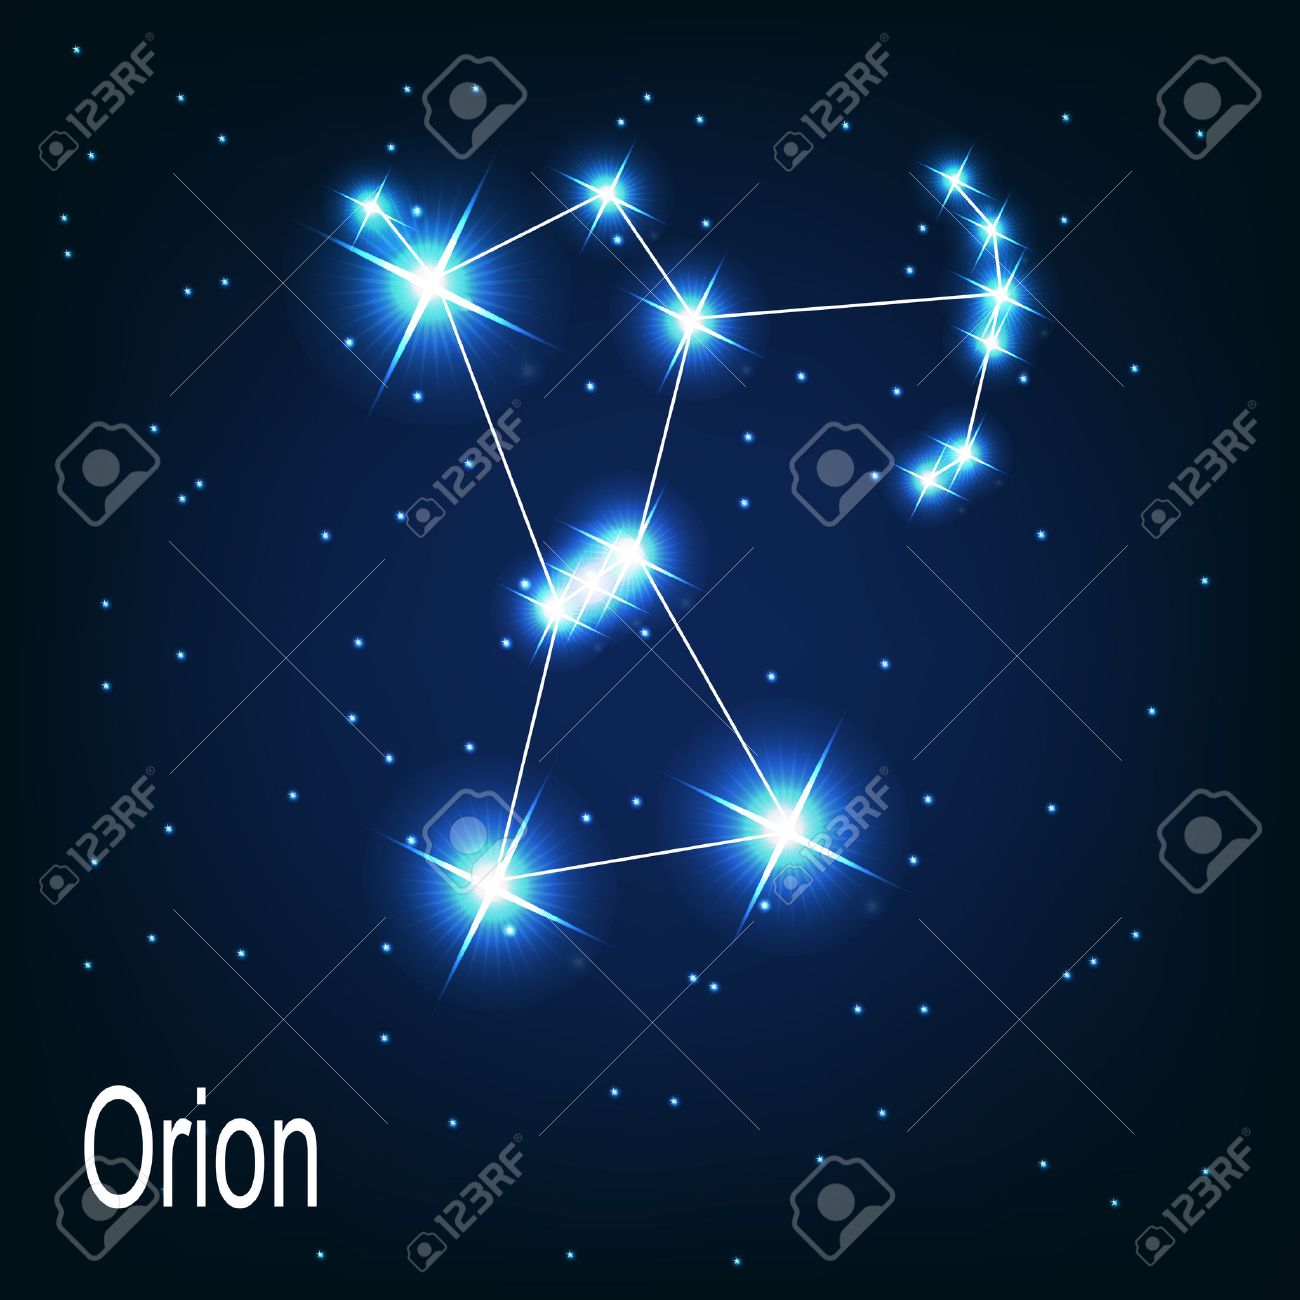 22858197-the-constellation-orion-star-in-the-night-sky-vector-illustration.jpg